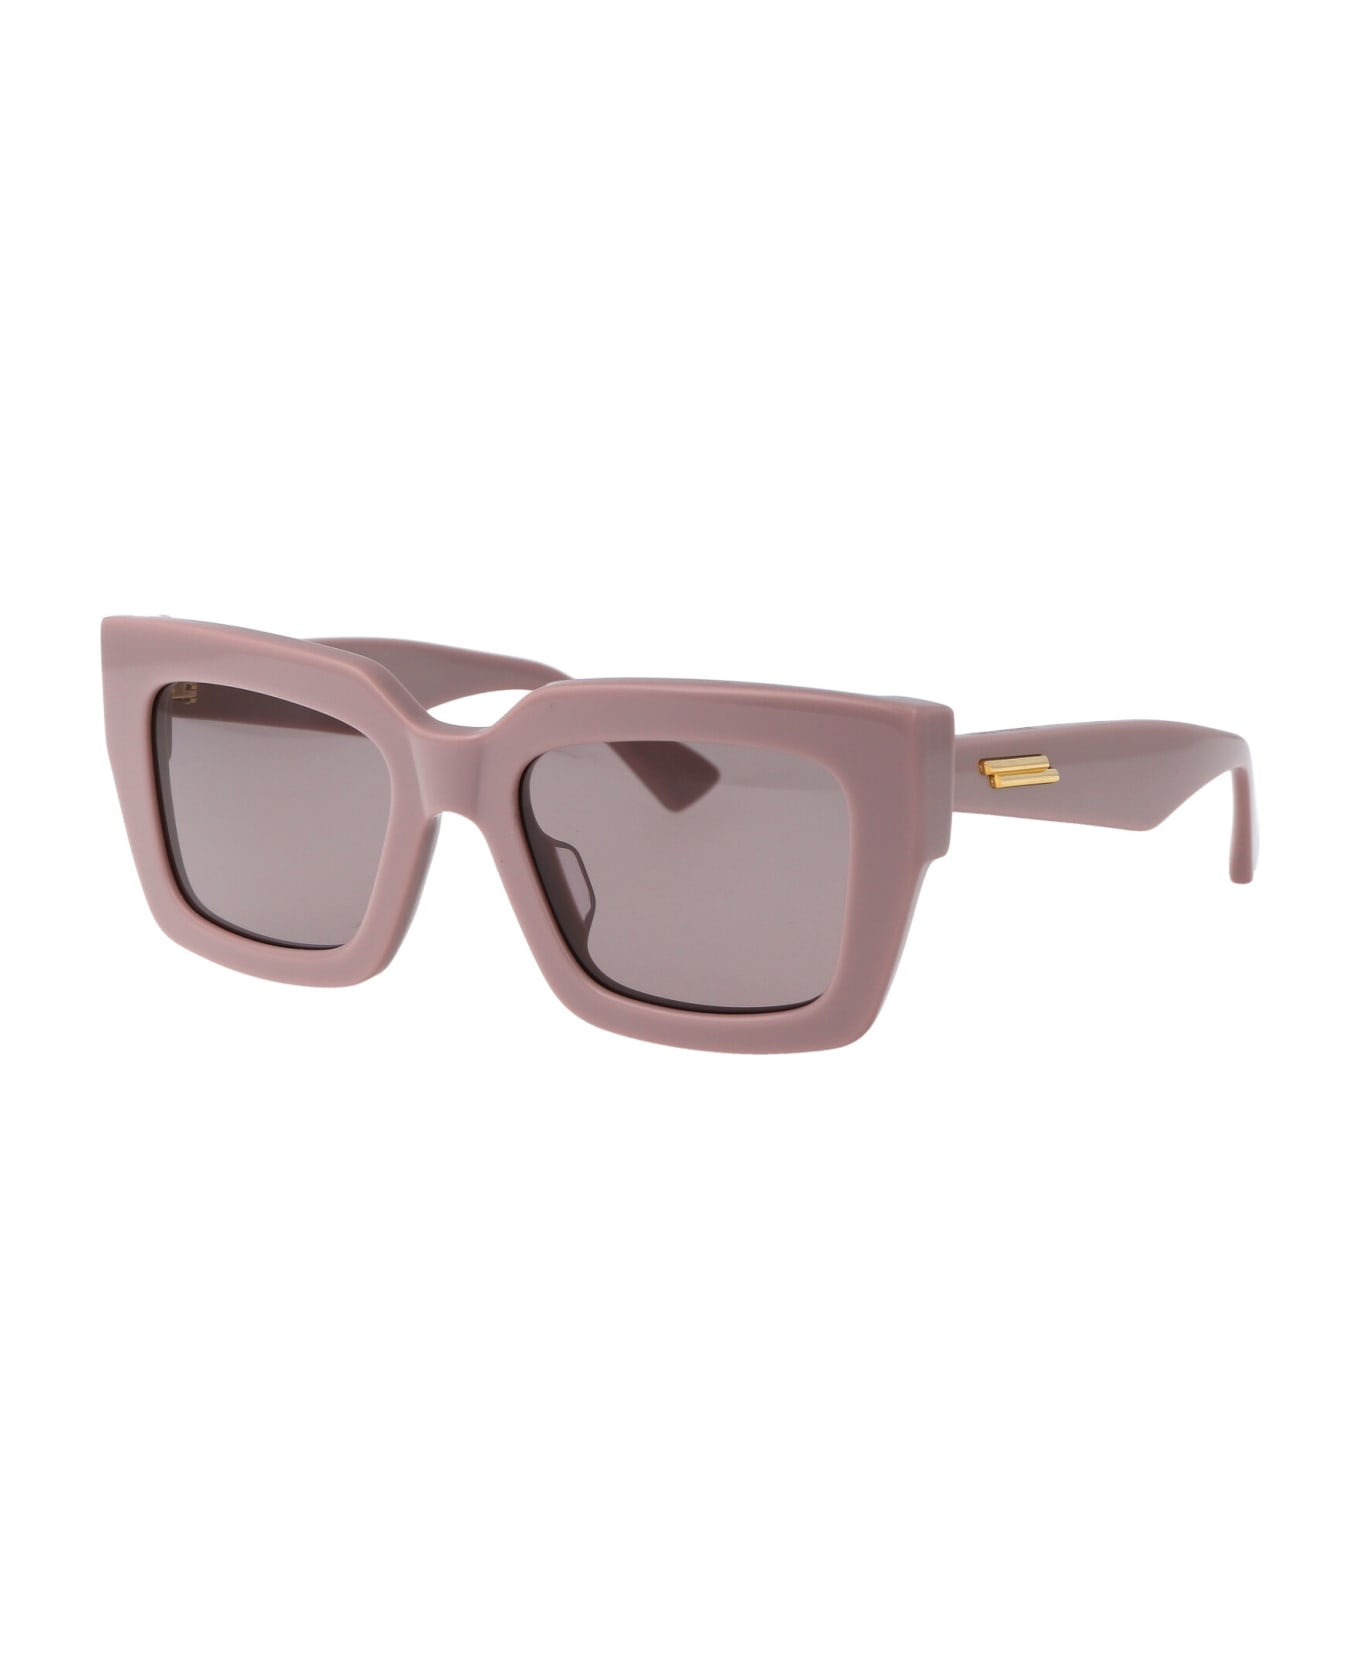 Bottega Veneta Eyewear Bv1212s Sunglasses - 006 PINK PINK VIOLET サングラス